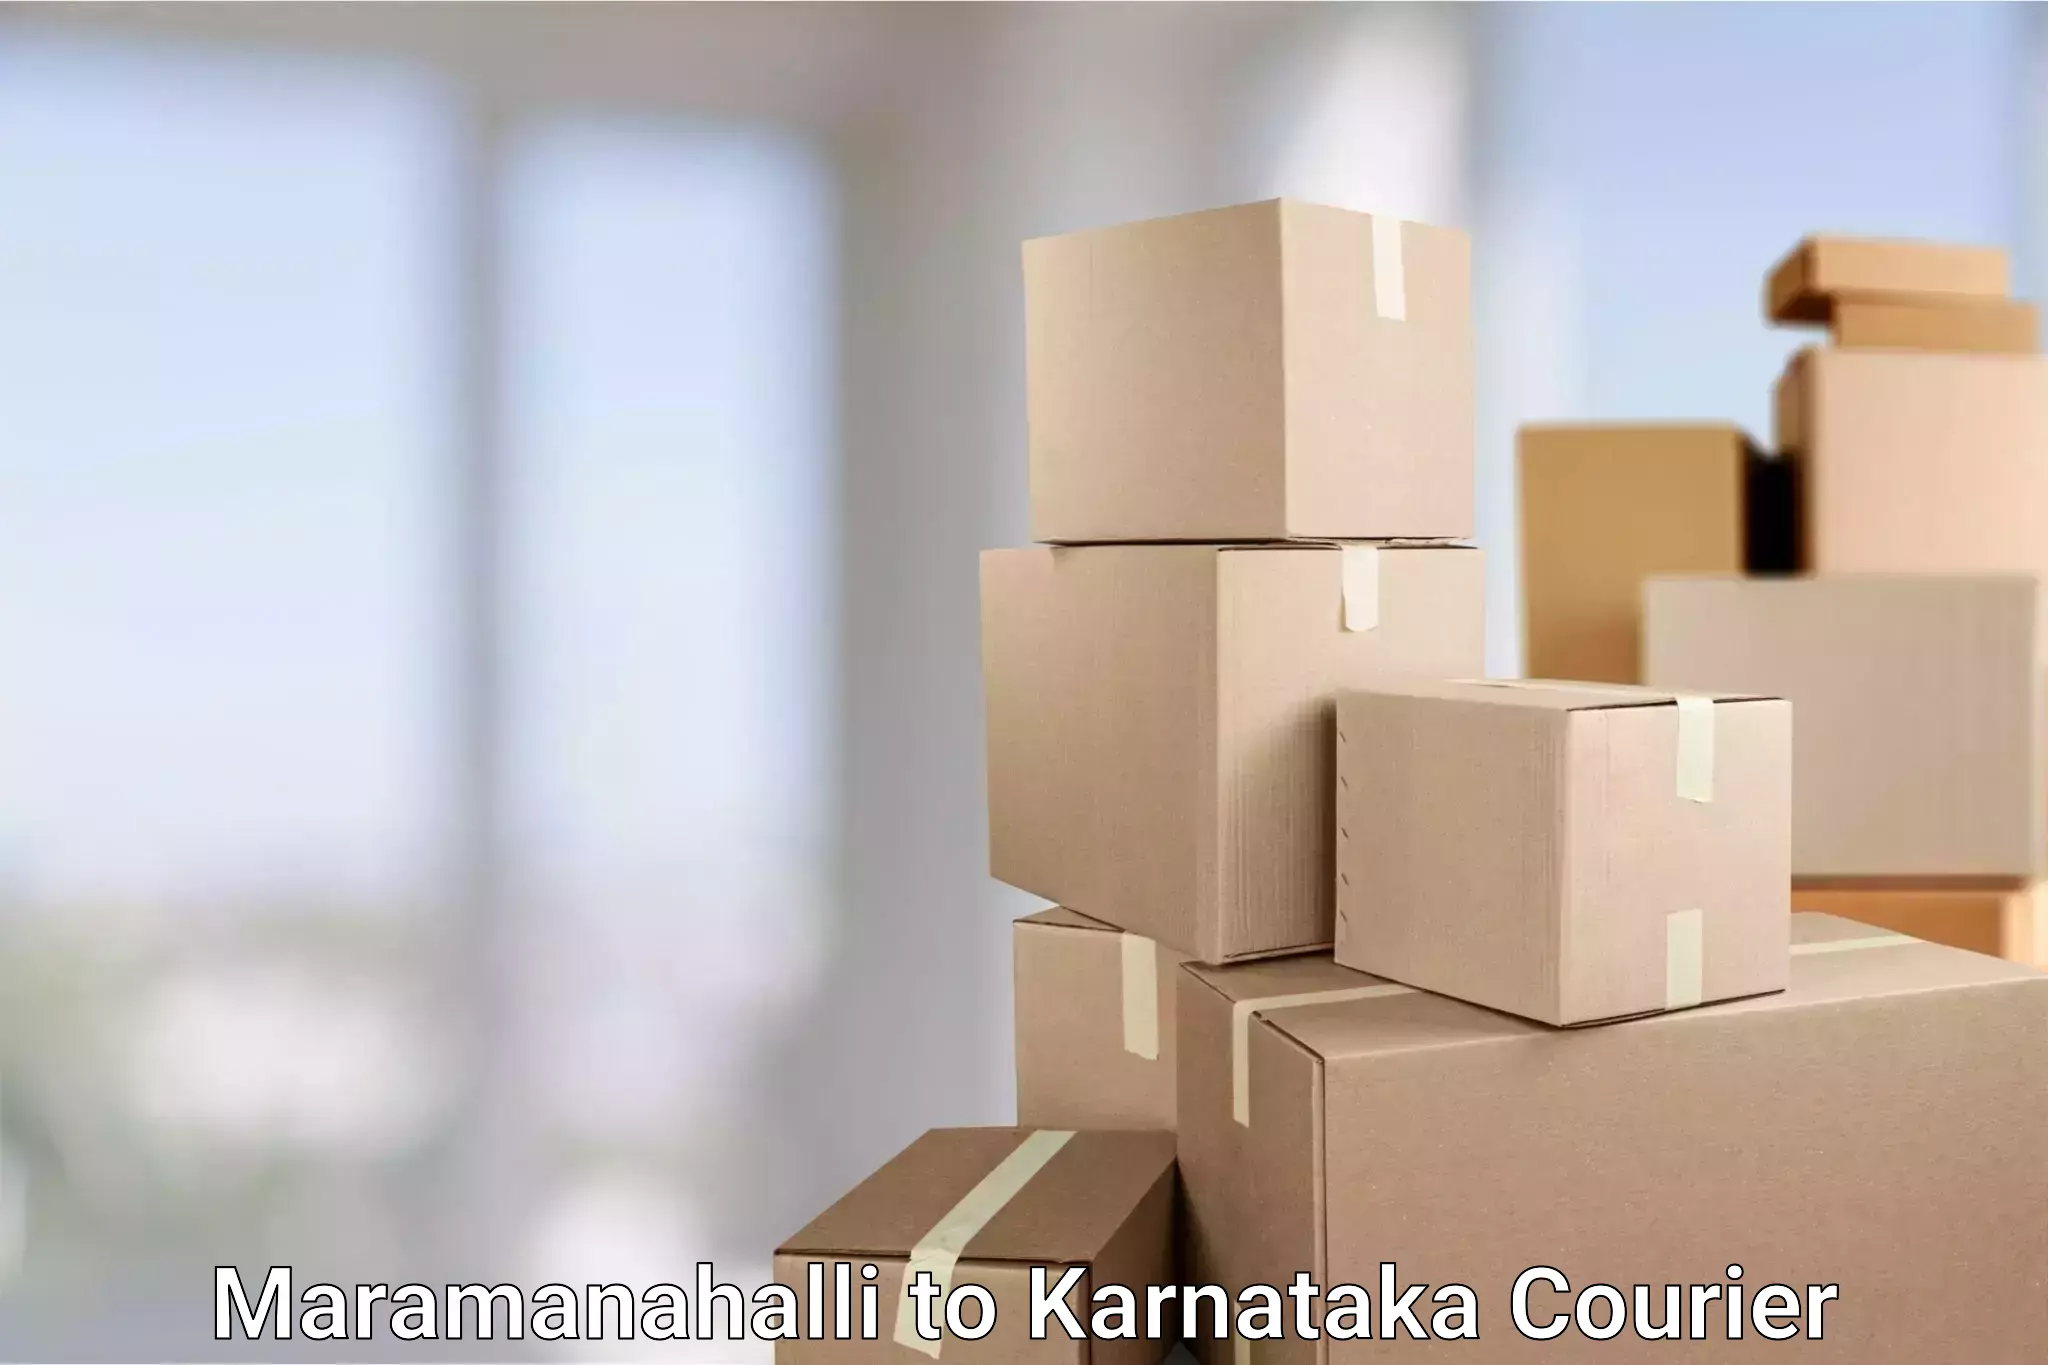 Advanced shipping network Maramanahalli to Bangalore